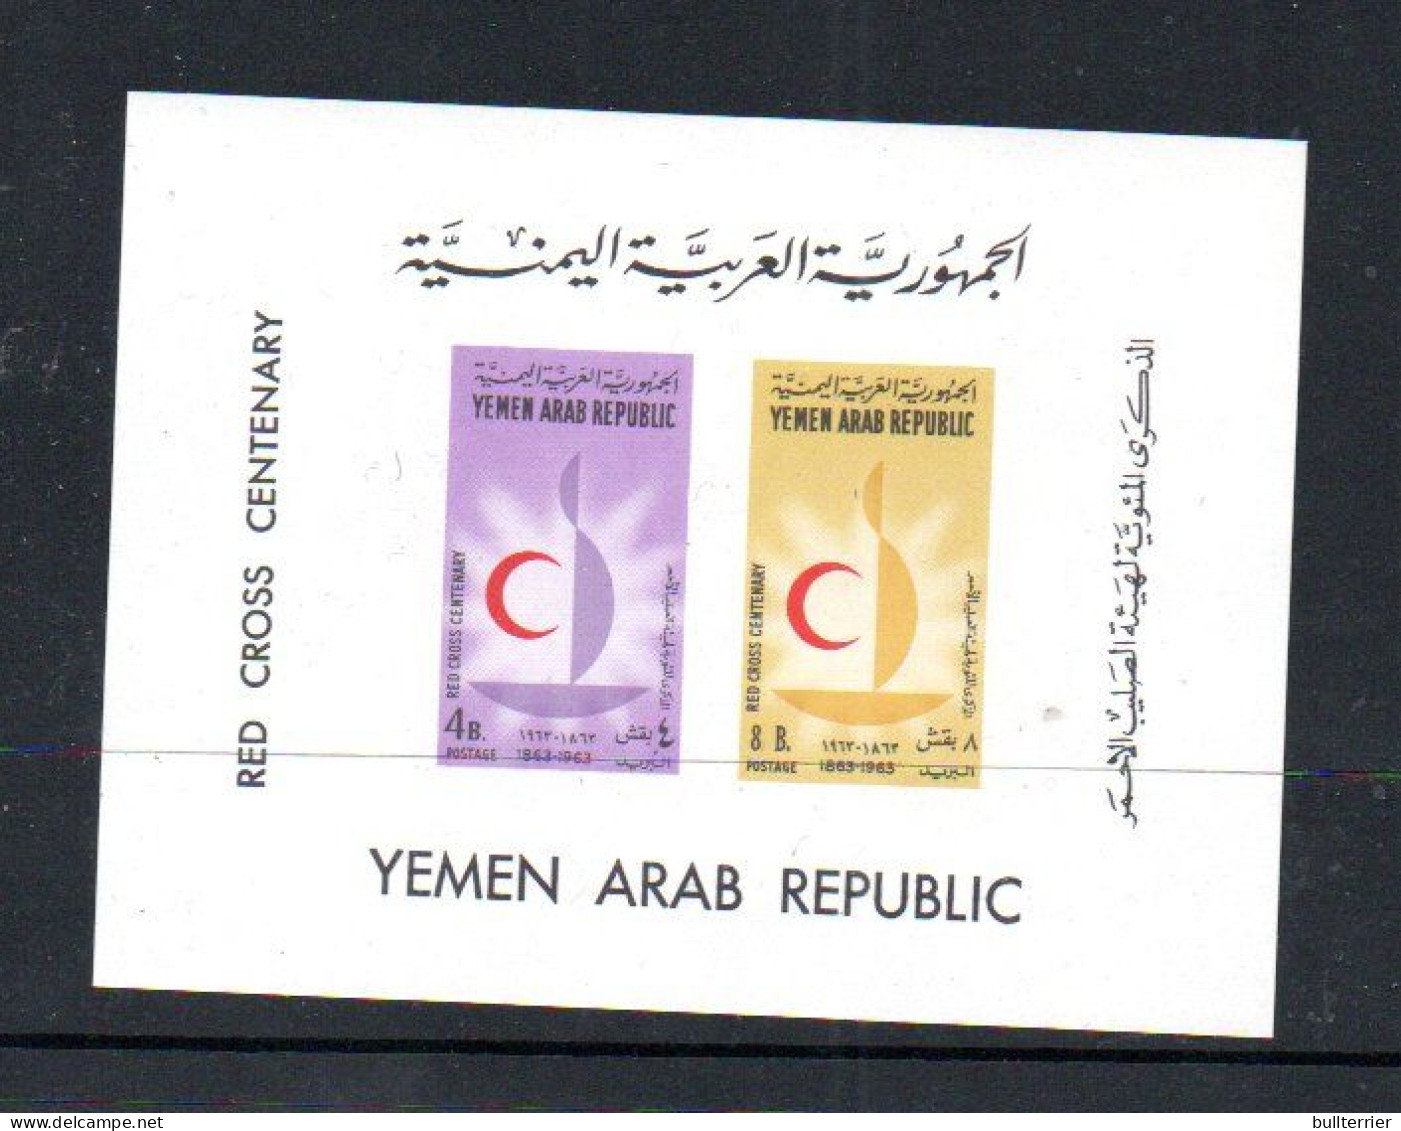 MEDICINE - YEMEN ARAB REPUBLIC - 1963 - RED CROSS CENTENARY  S/SHEET MINT NEVER HINGED SG £22 - Geneeskunde